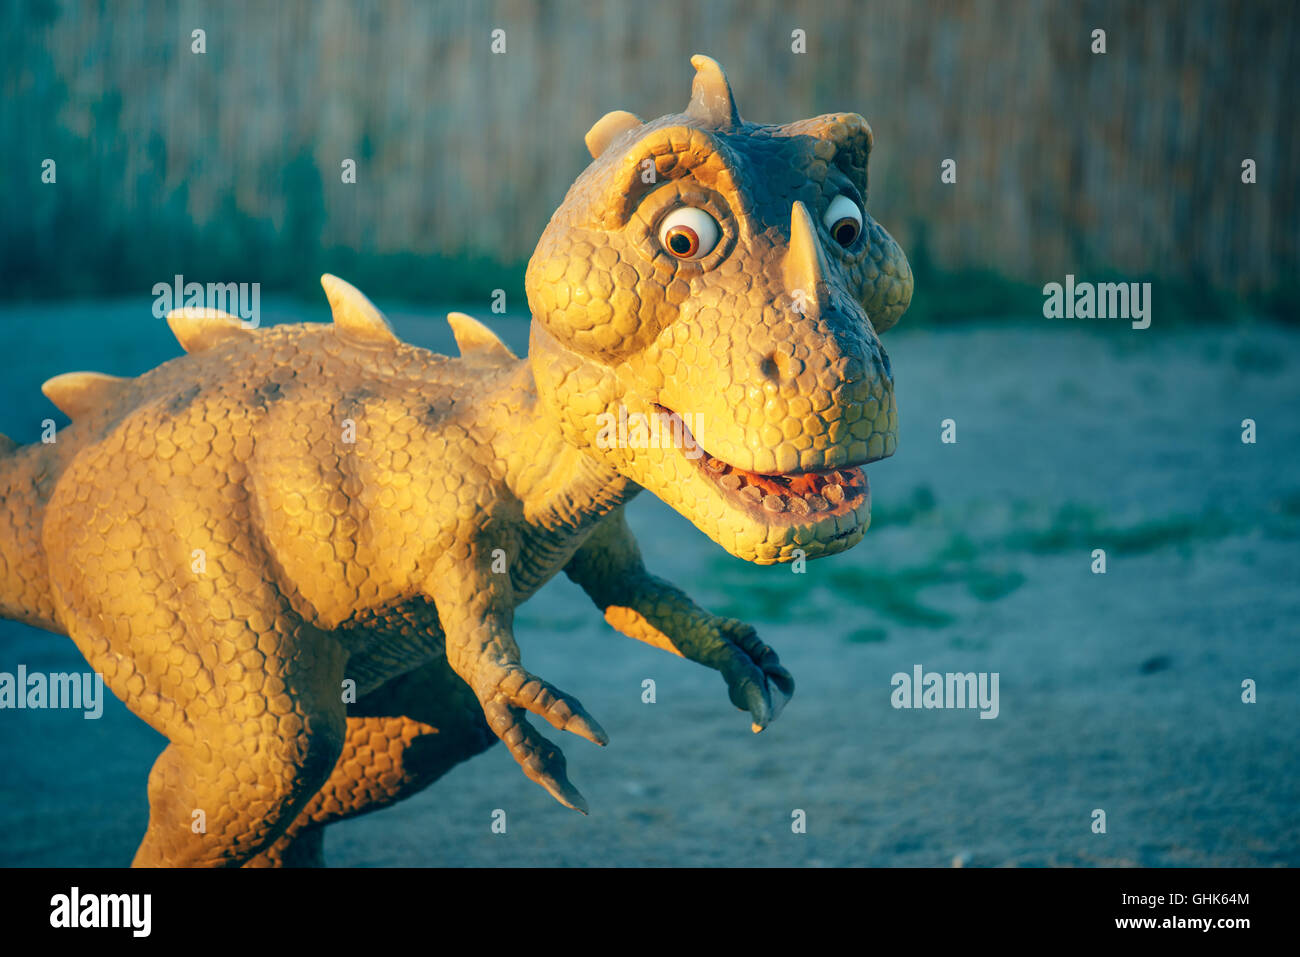 NOVI SAD, SERBIA - AUGUST 7, 2016: Small dinosaur toy from themed entertainment Dino Park in Novi Sad. Stock Photo